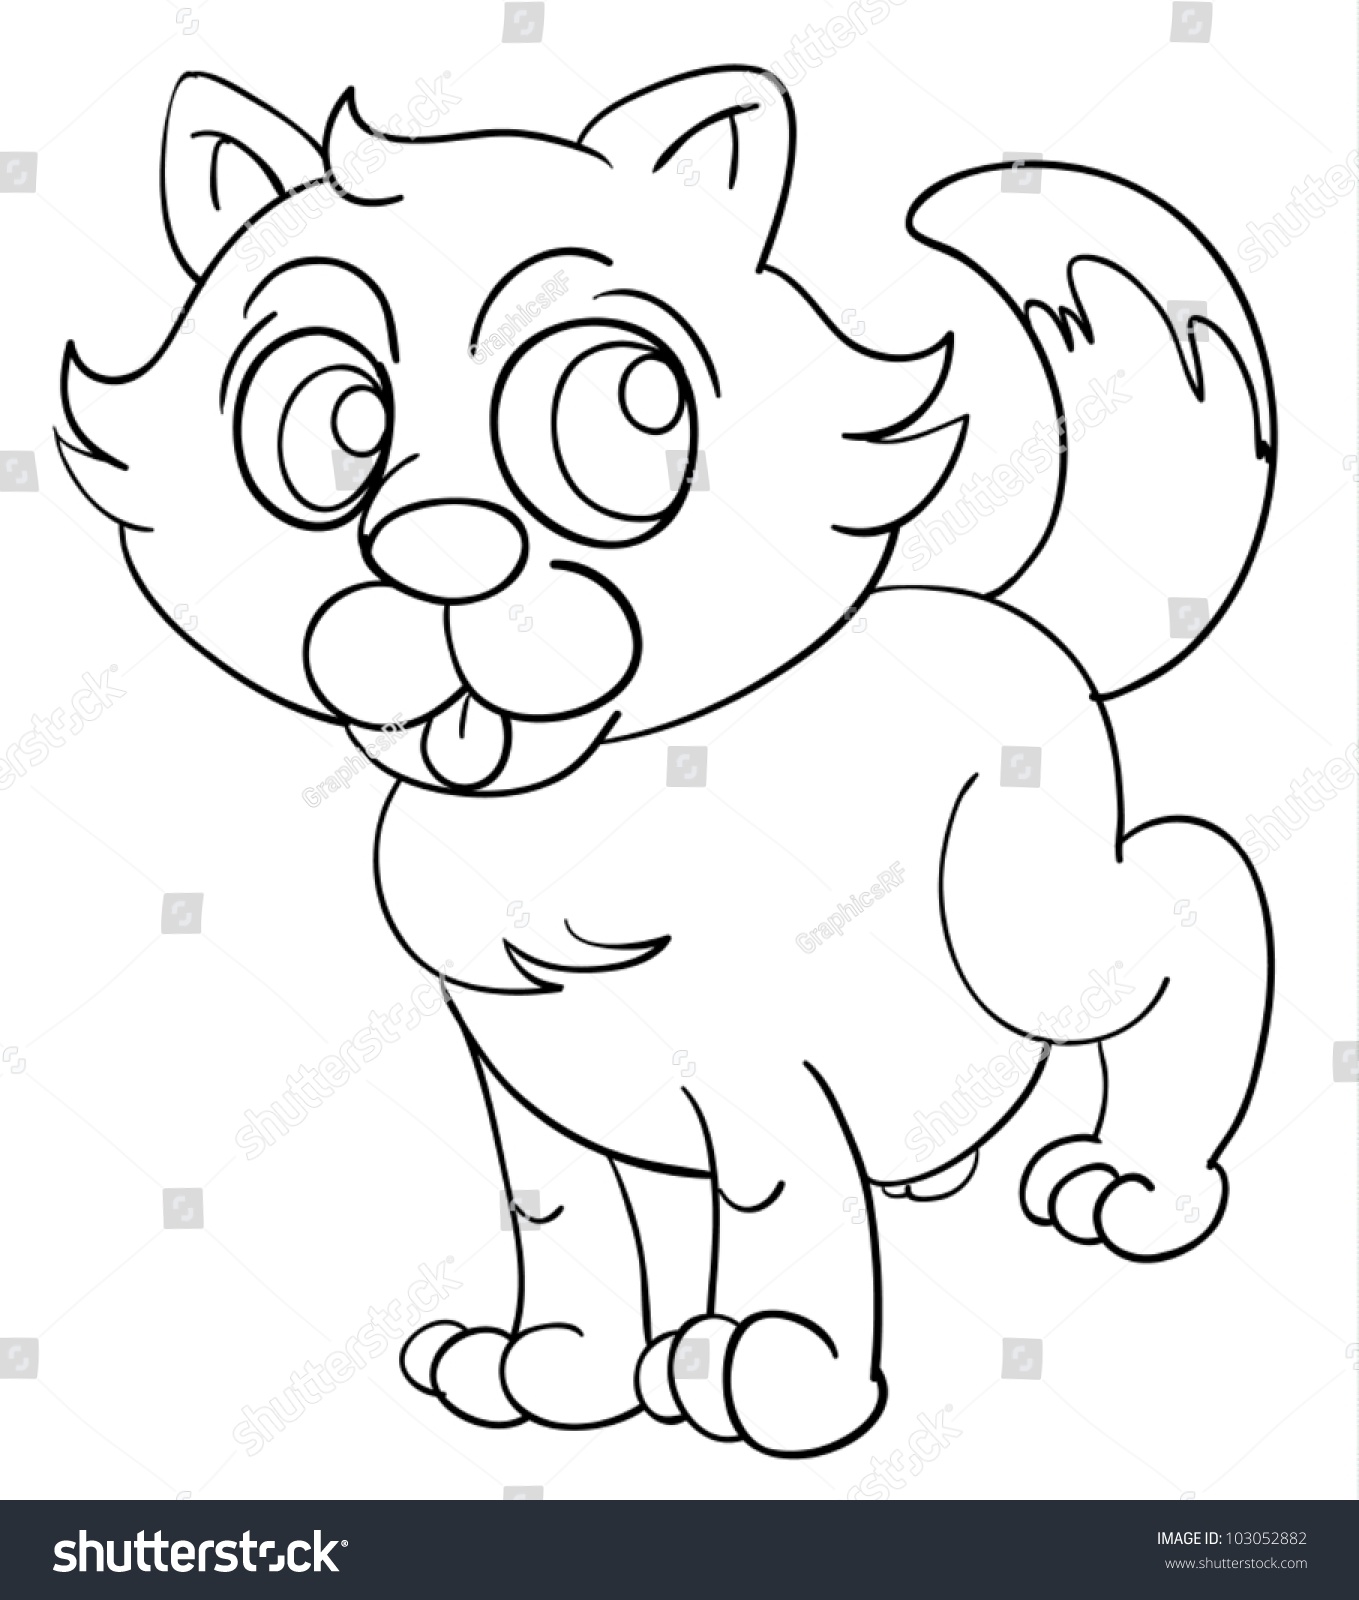 Illustration Of A Cat Outline - 103052882 : Shutterstock